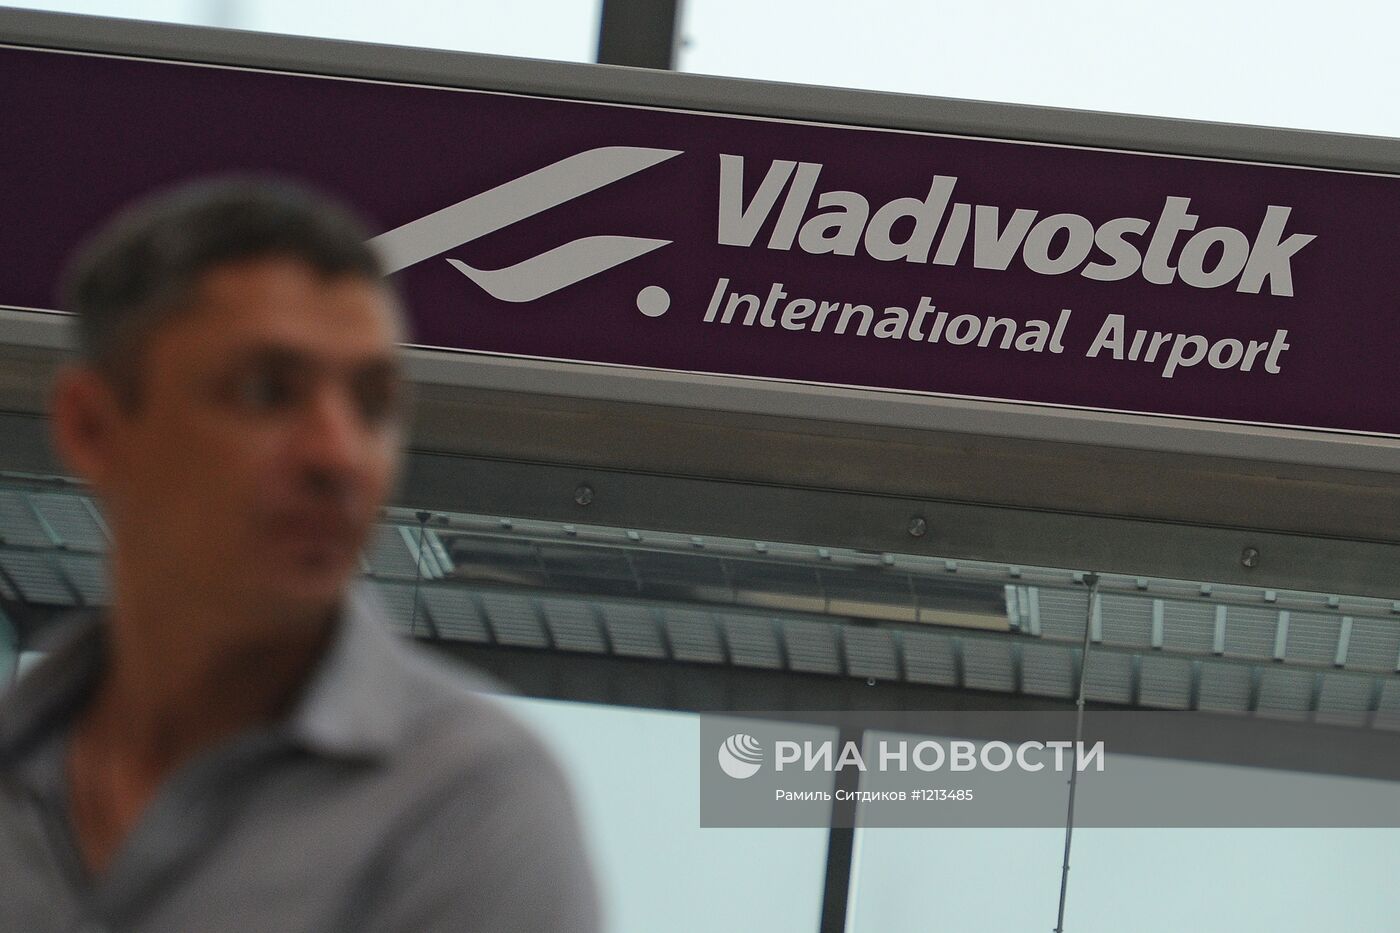 Работа нового терминала международного аэропорта "Владивосток"